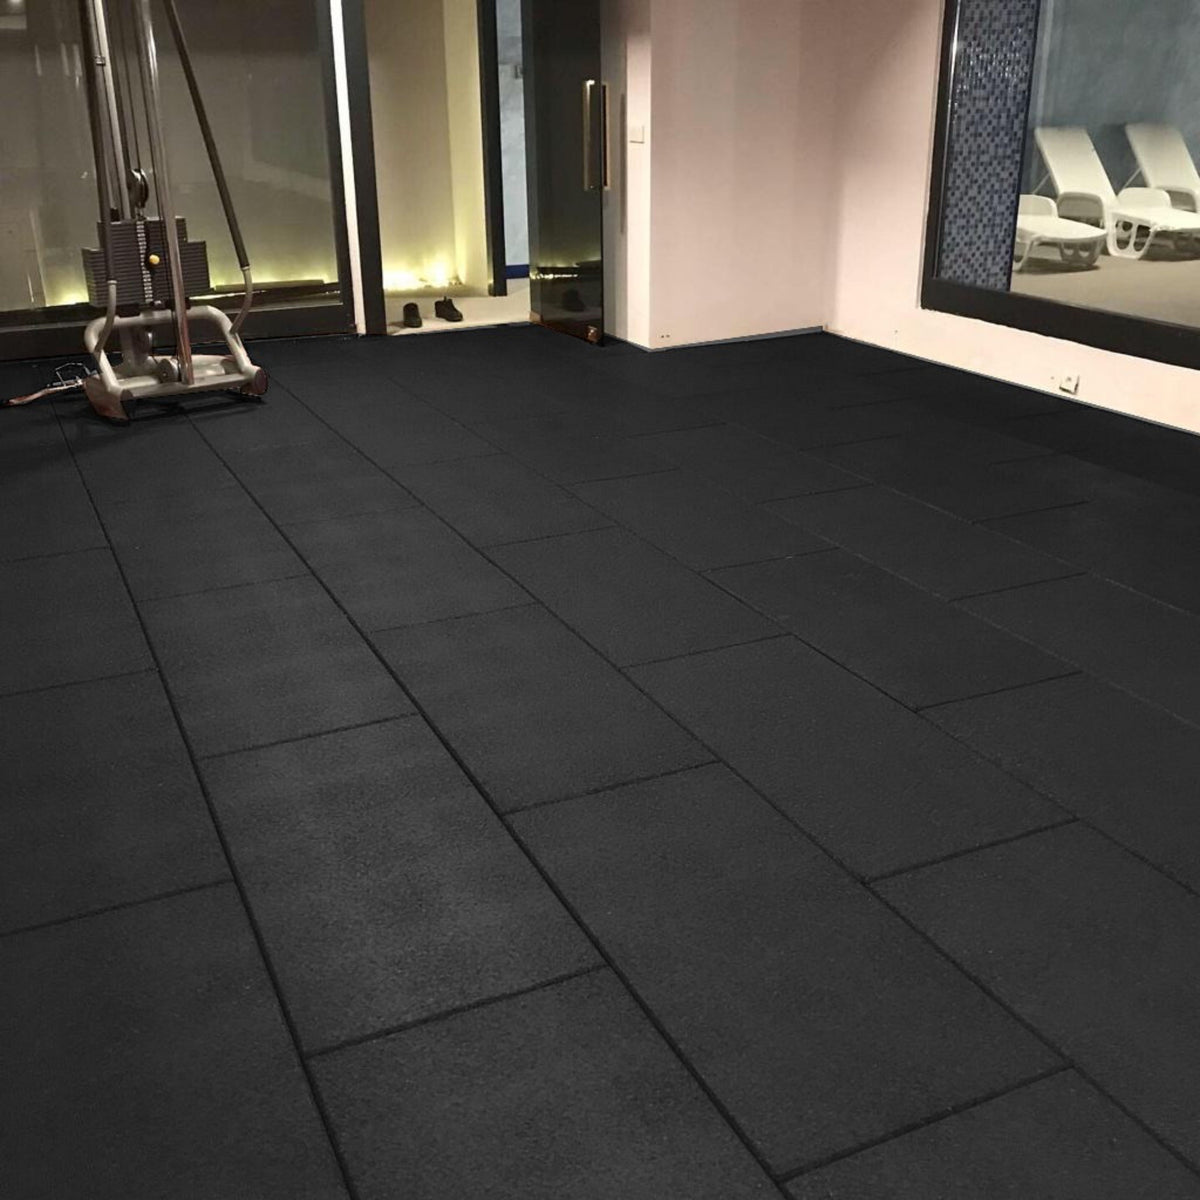 36m2 double garage package, BeFit Flatline Black Rubber Gym Flooring - Cannons UK